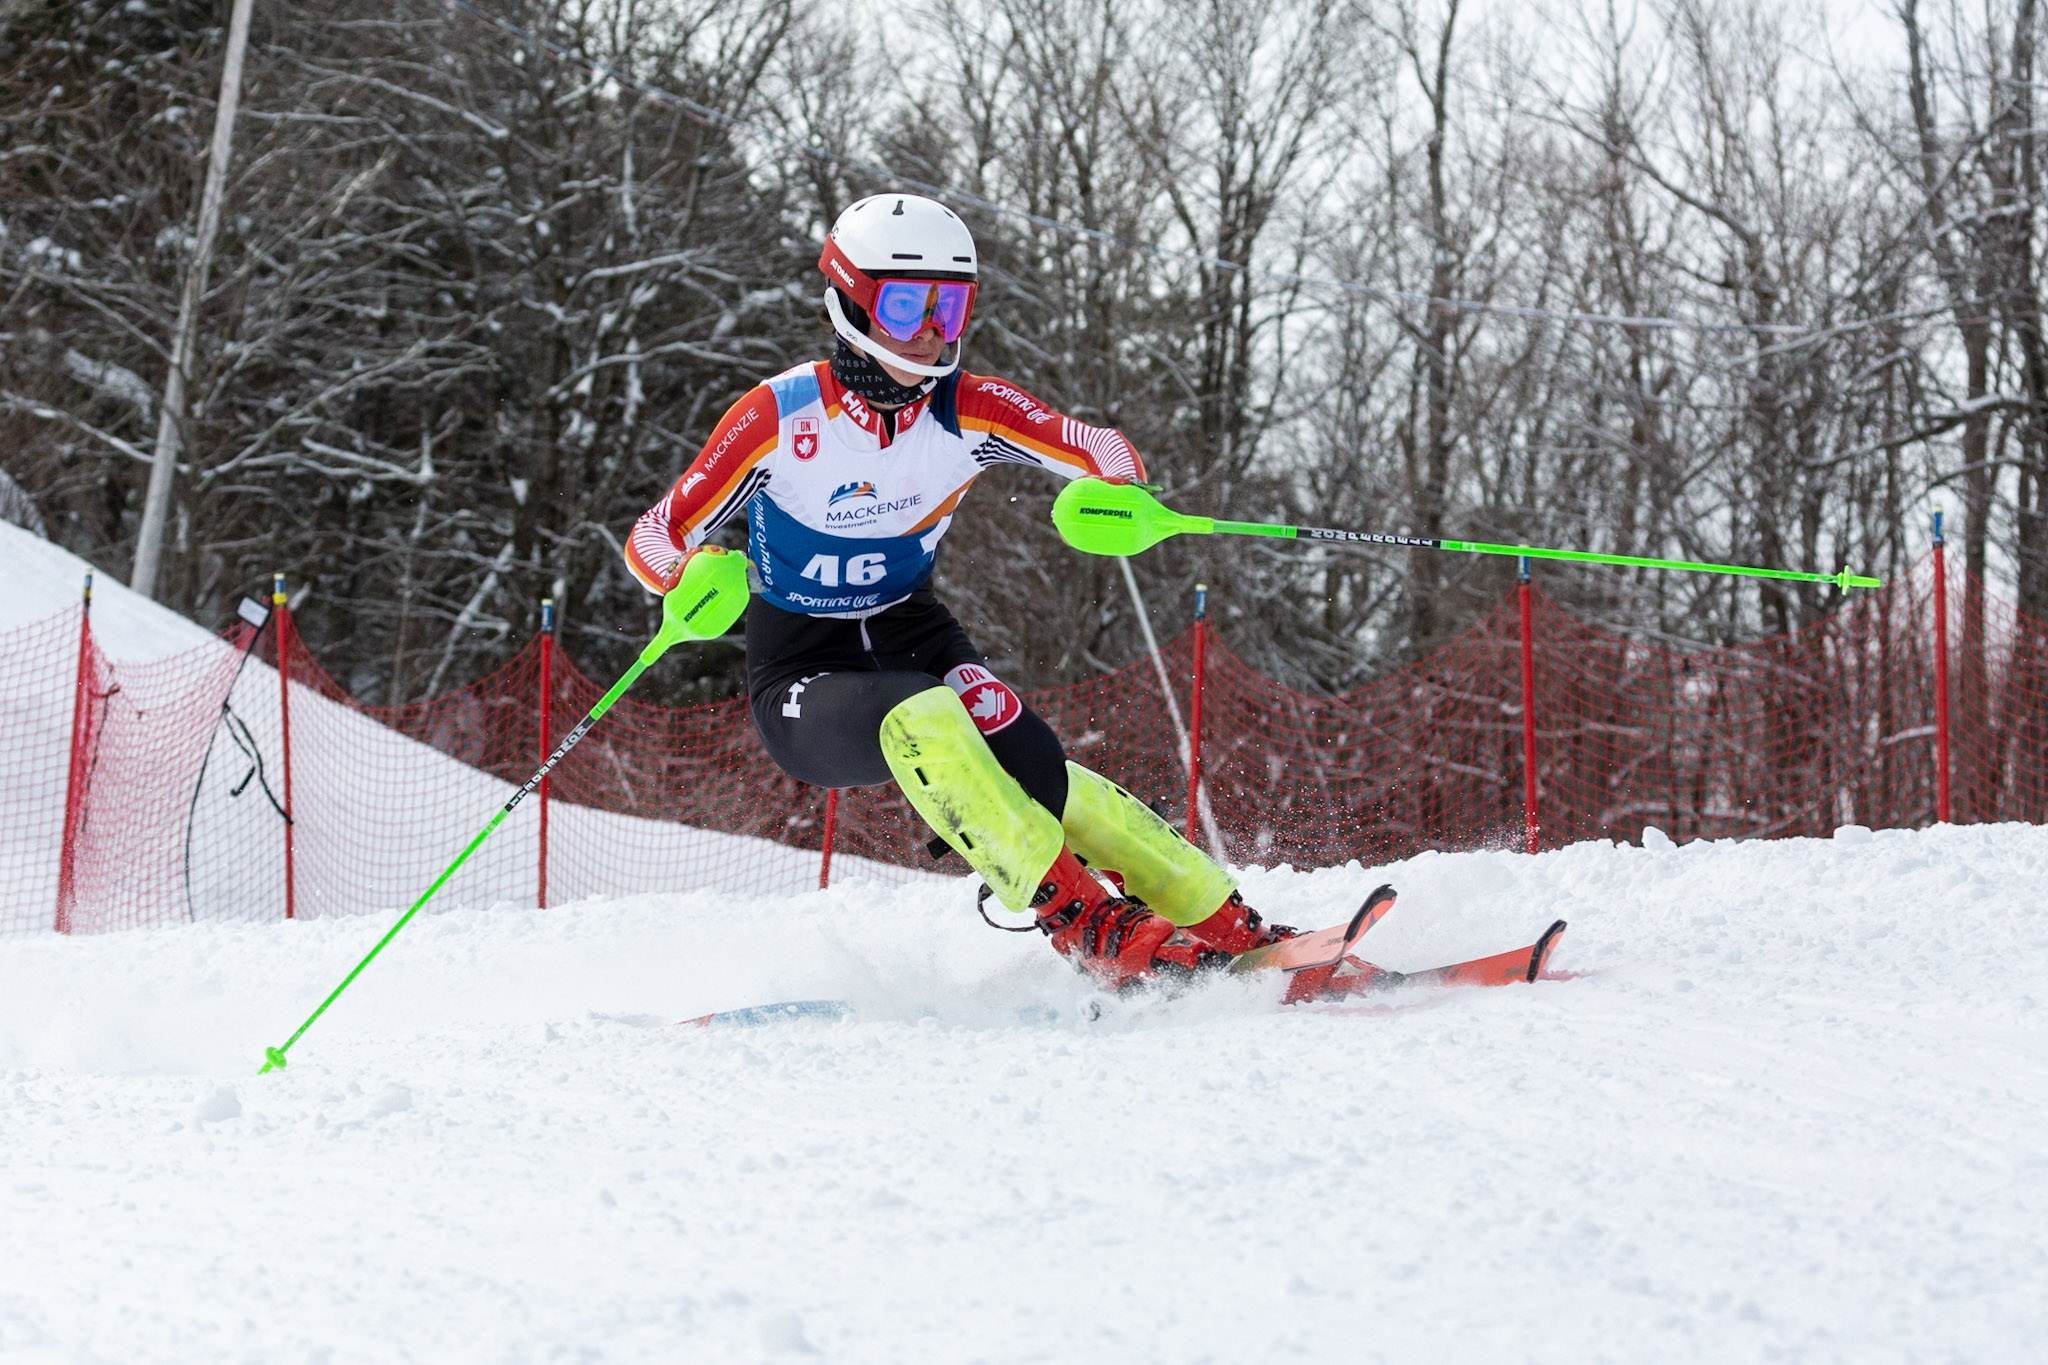 Skier racing slalom